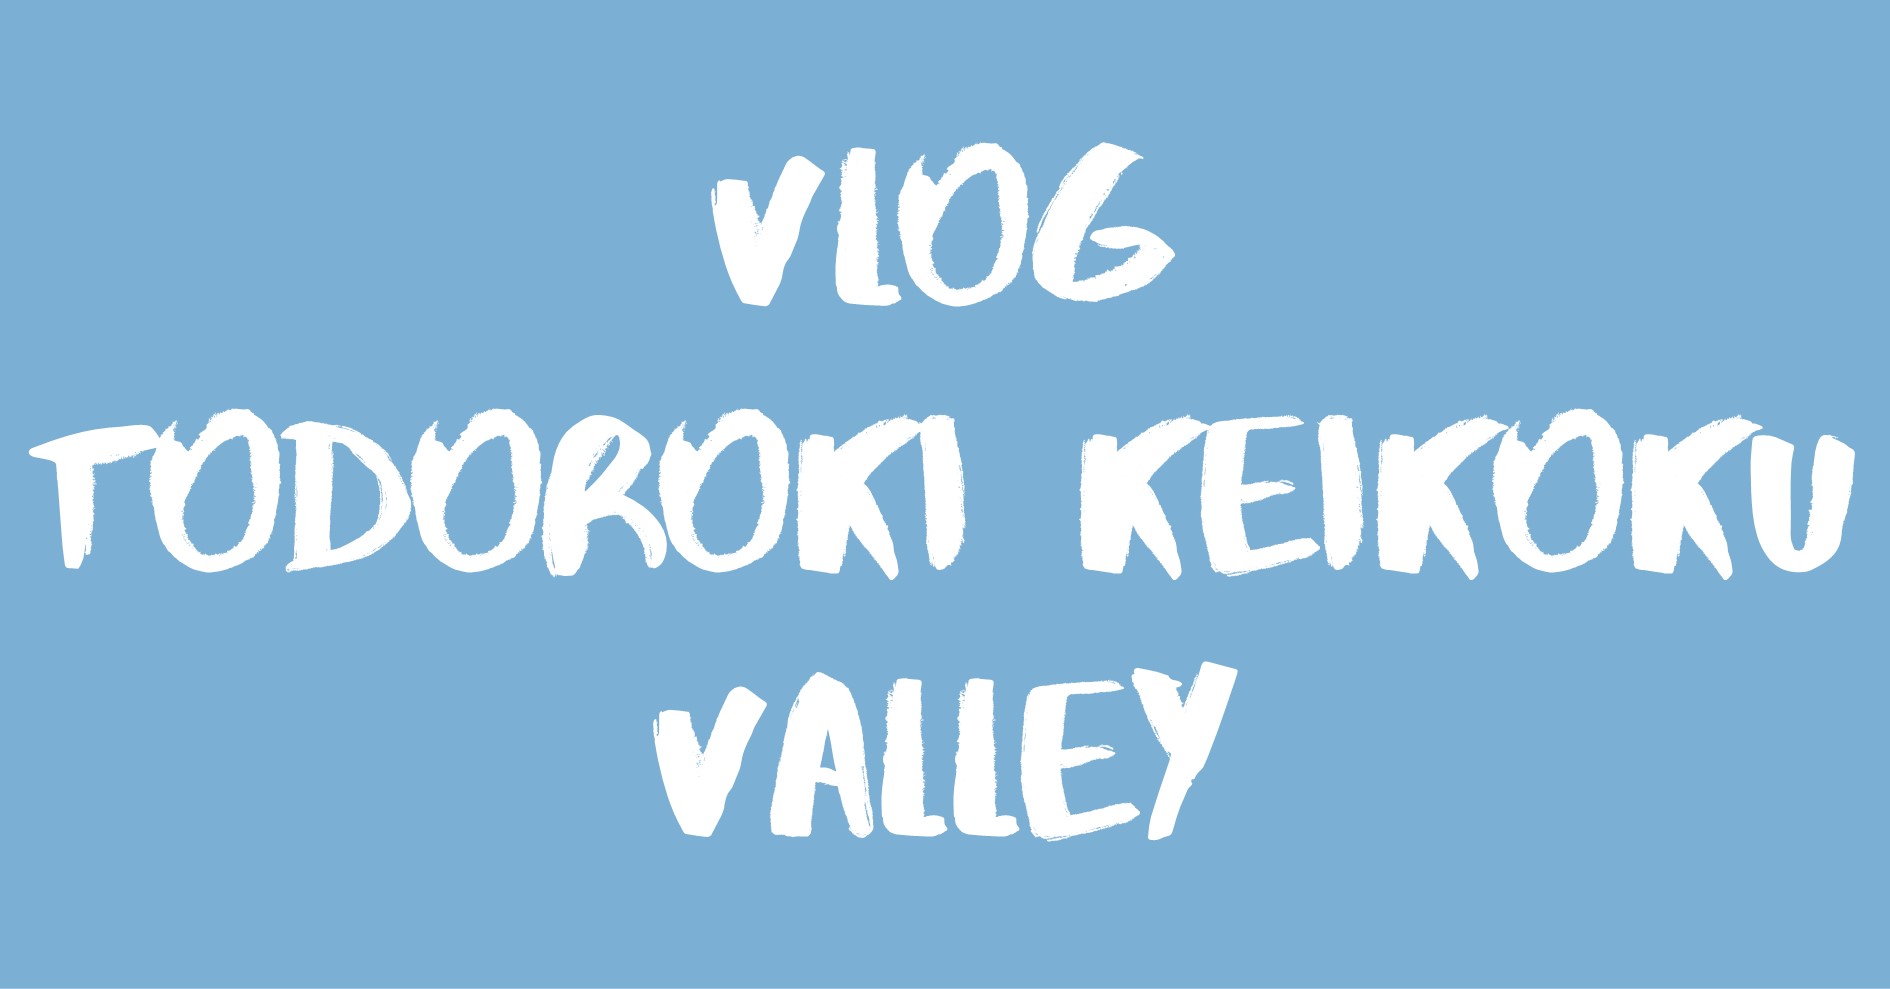 Vlog Todoroki Keikoku Valley